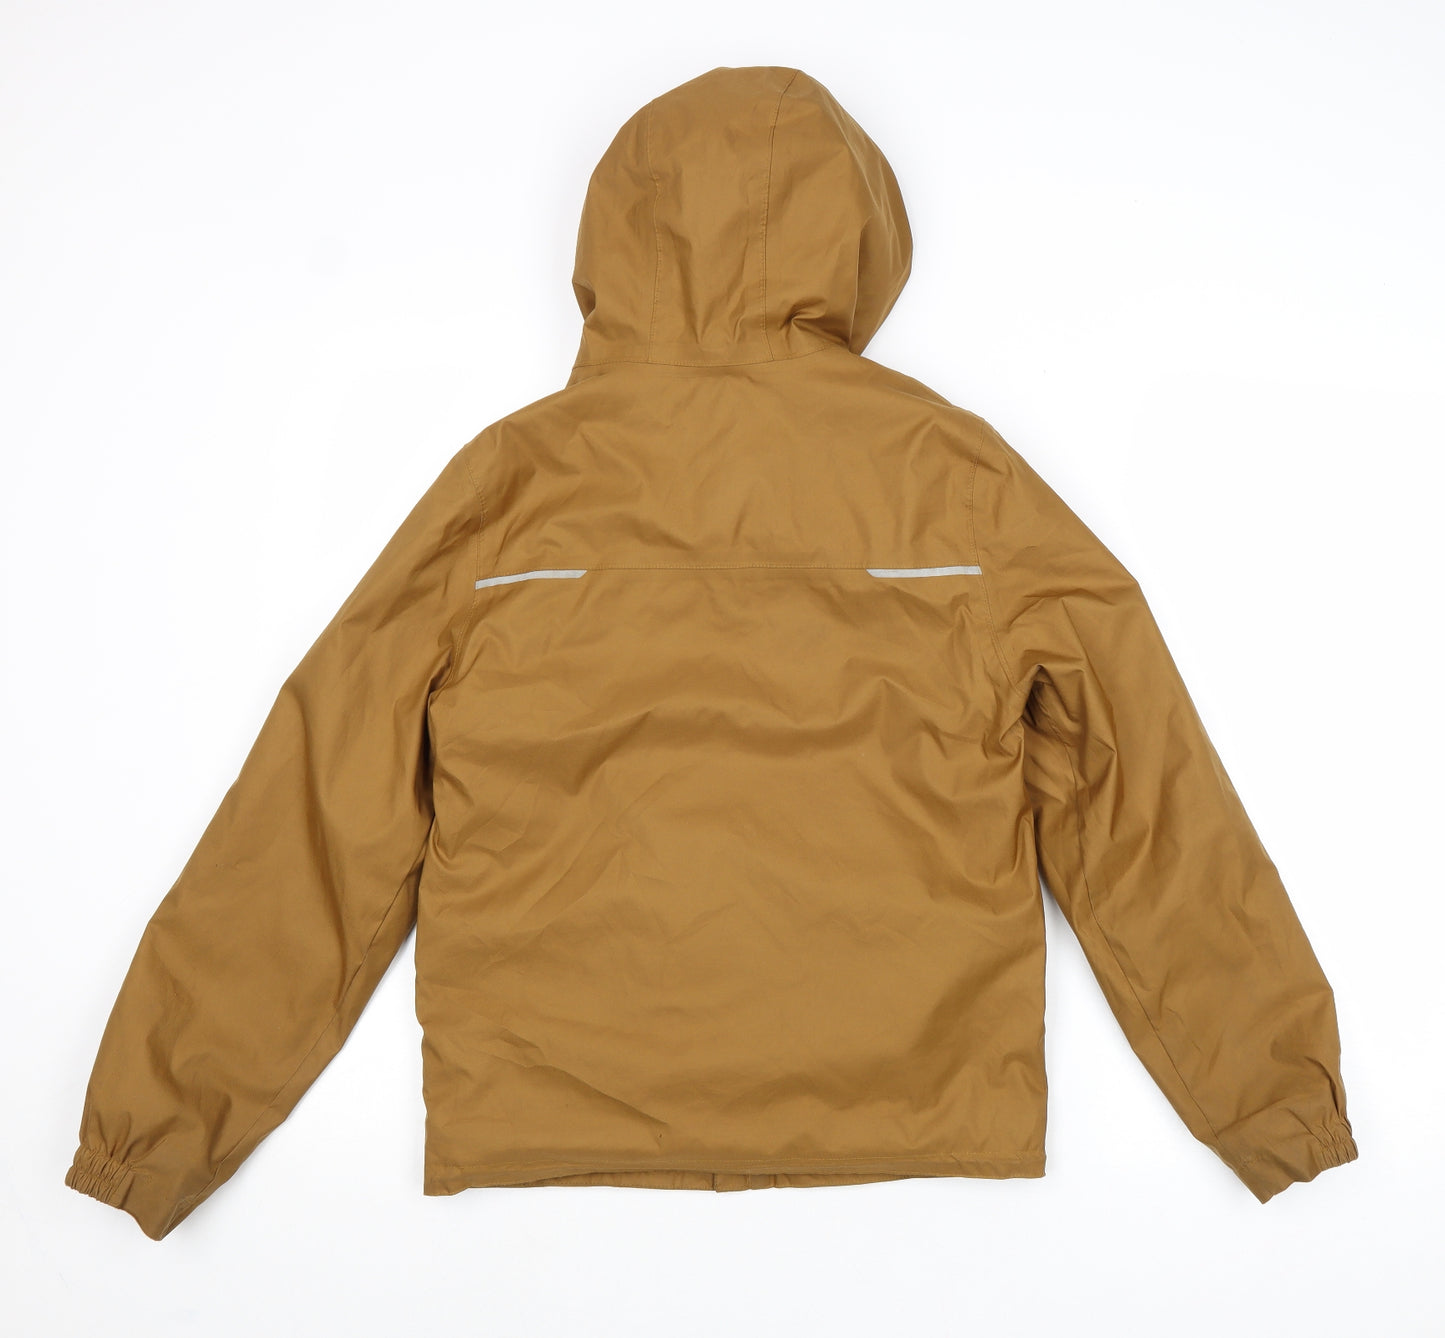 Quechua Boys Brown Windbreaker Jacket Size 10-11 Years Zip